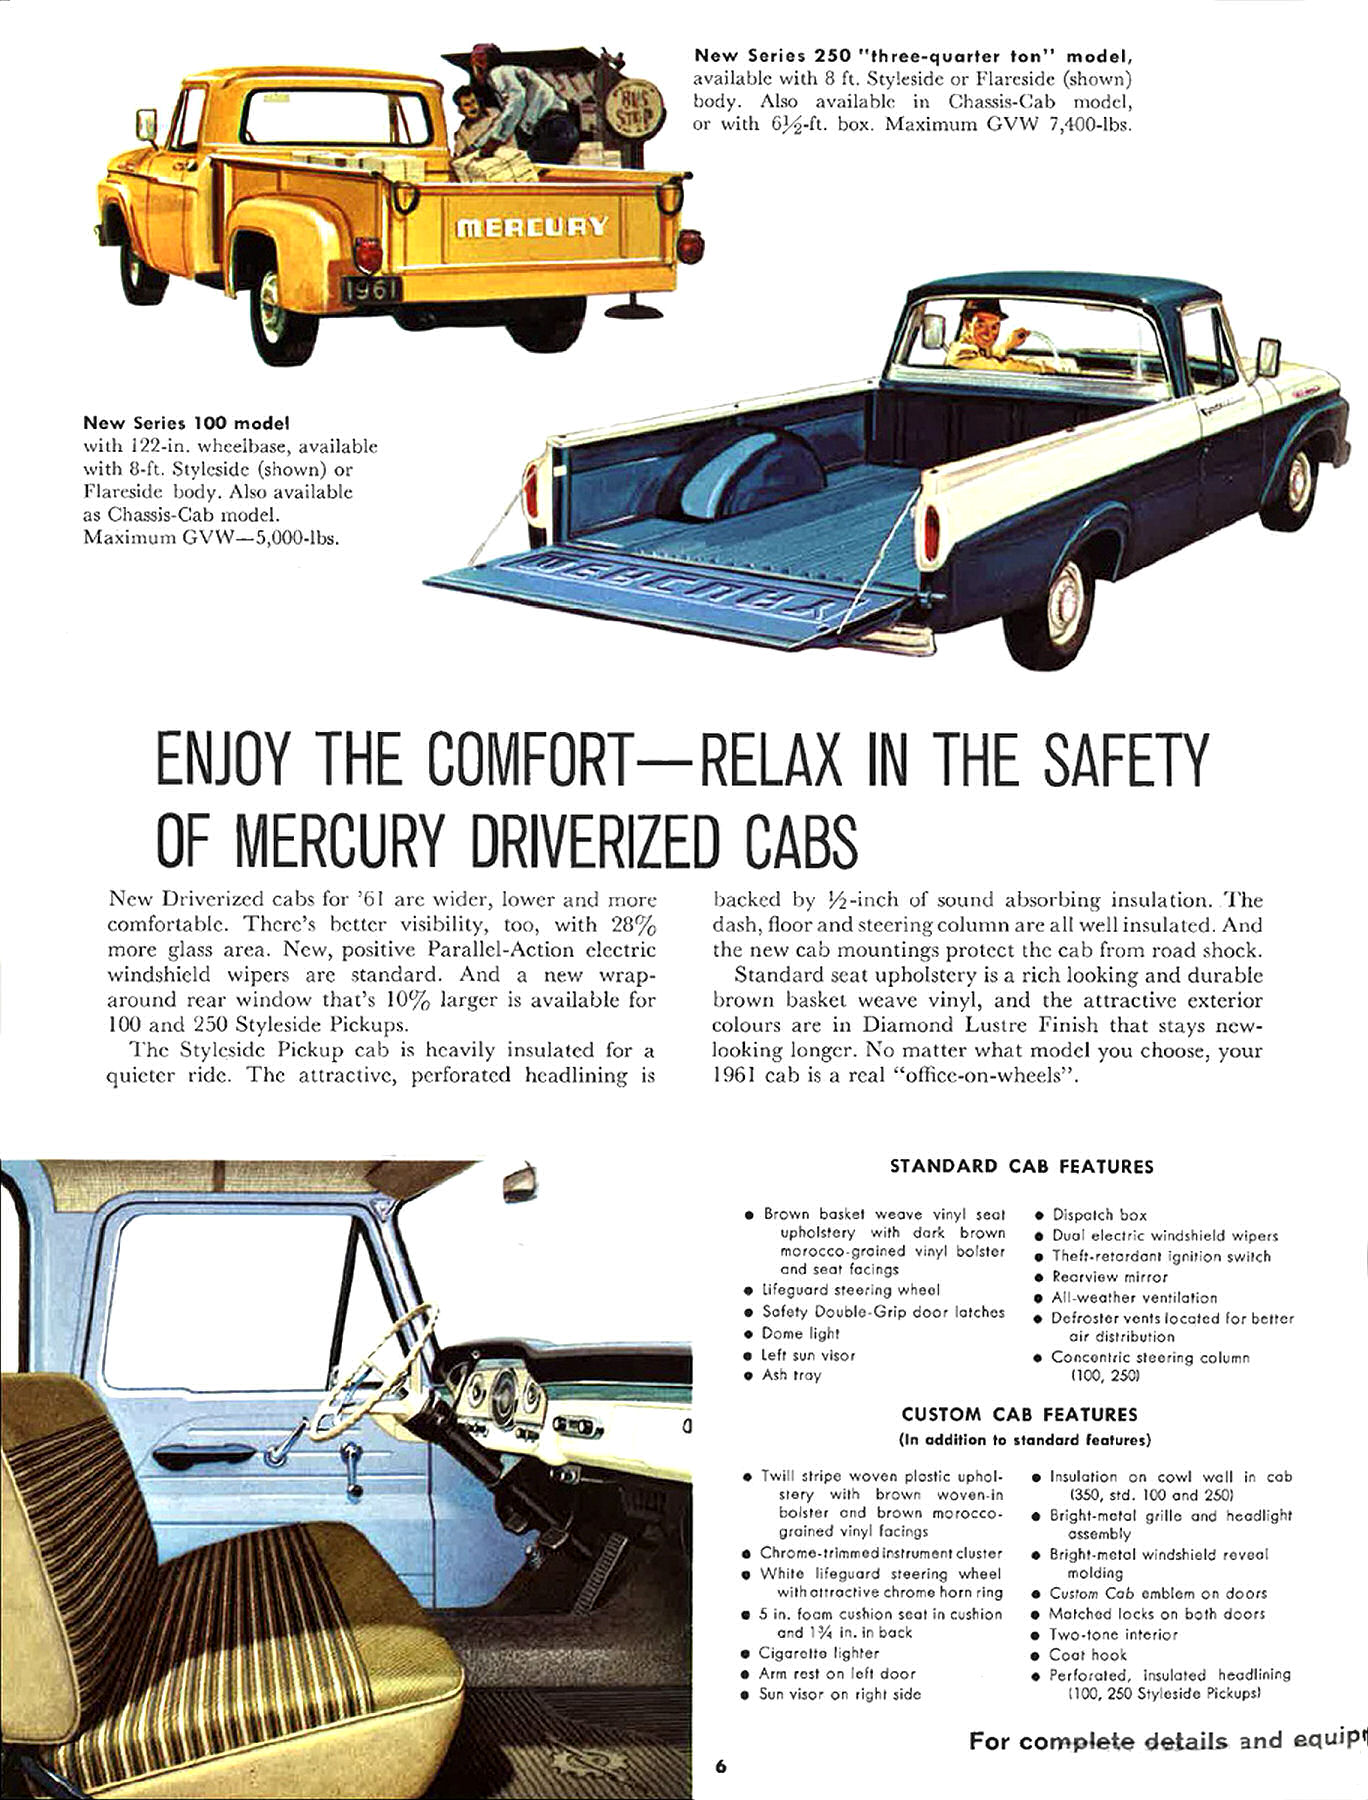 1961 Mercury Light Duty Trucks (Cdn)-06